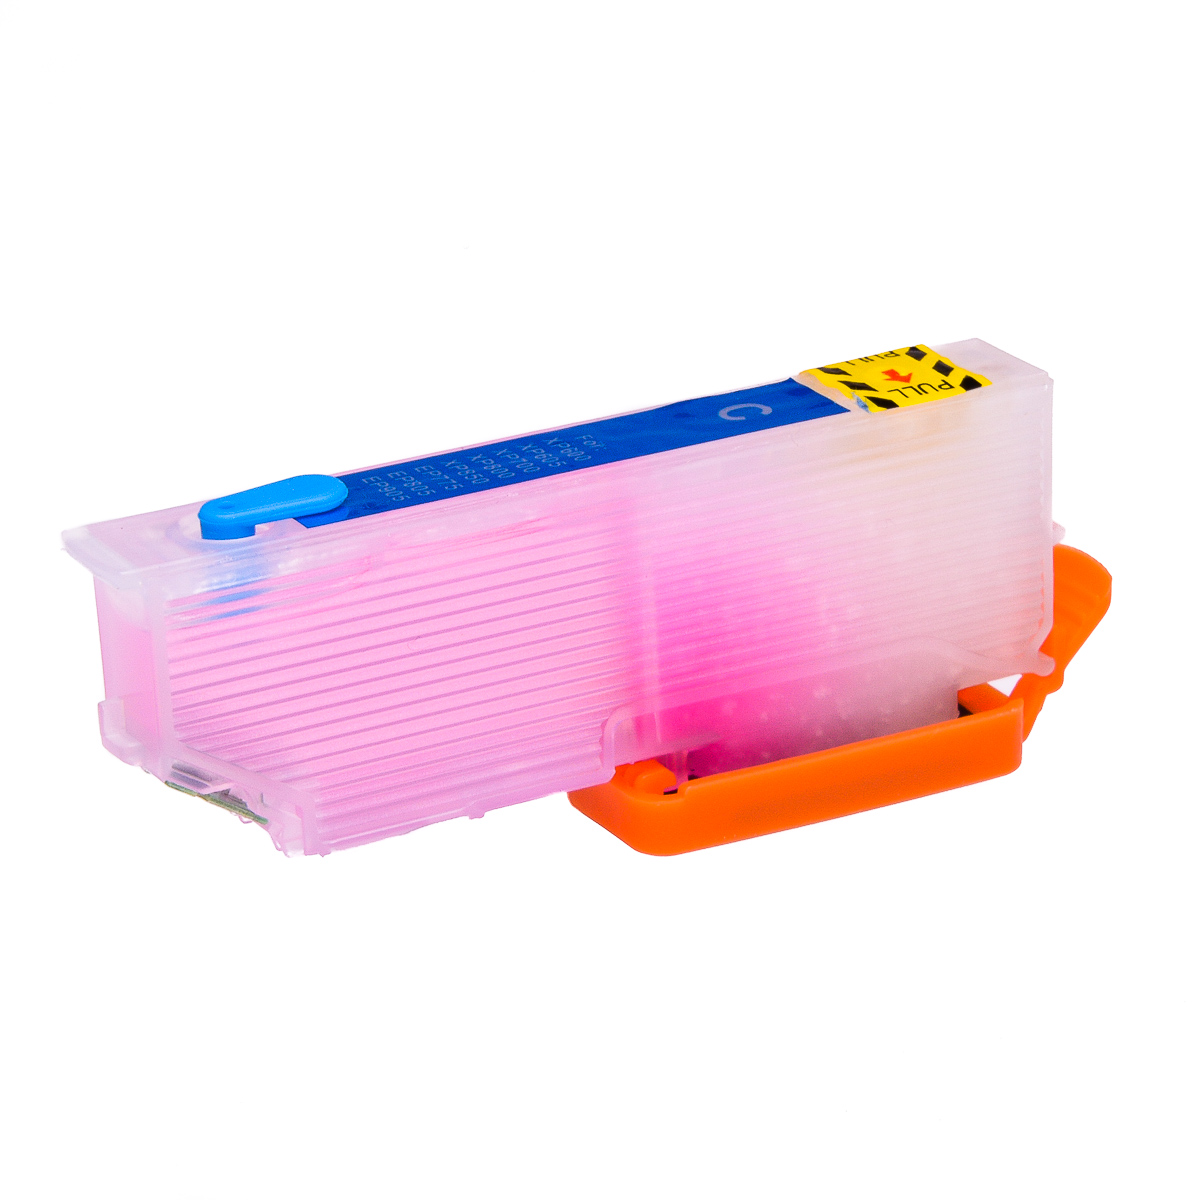 Cyan printhead cleaning cartridge for Epson XP-8505 printer